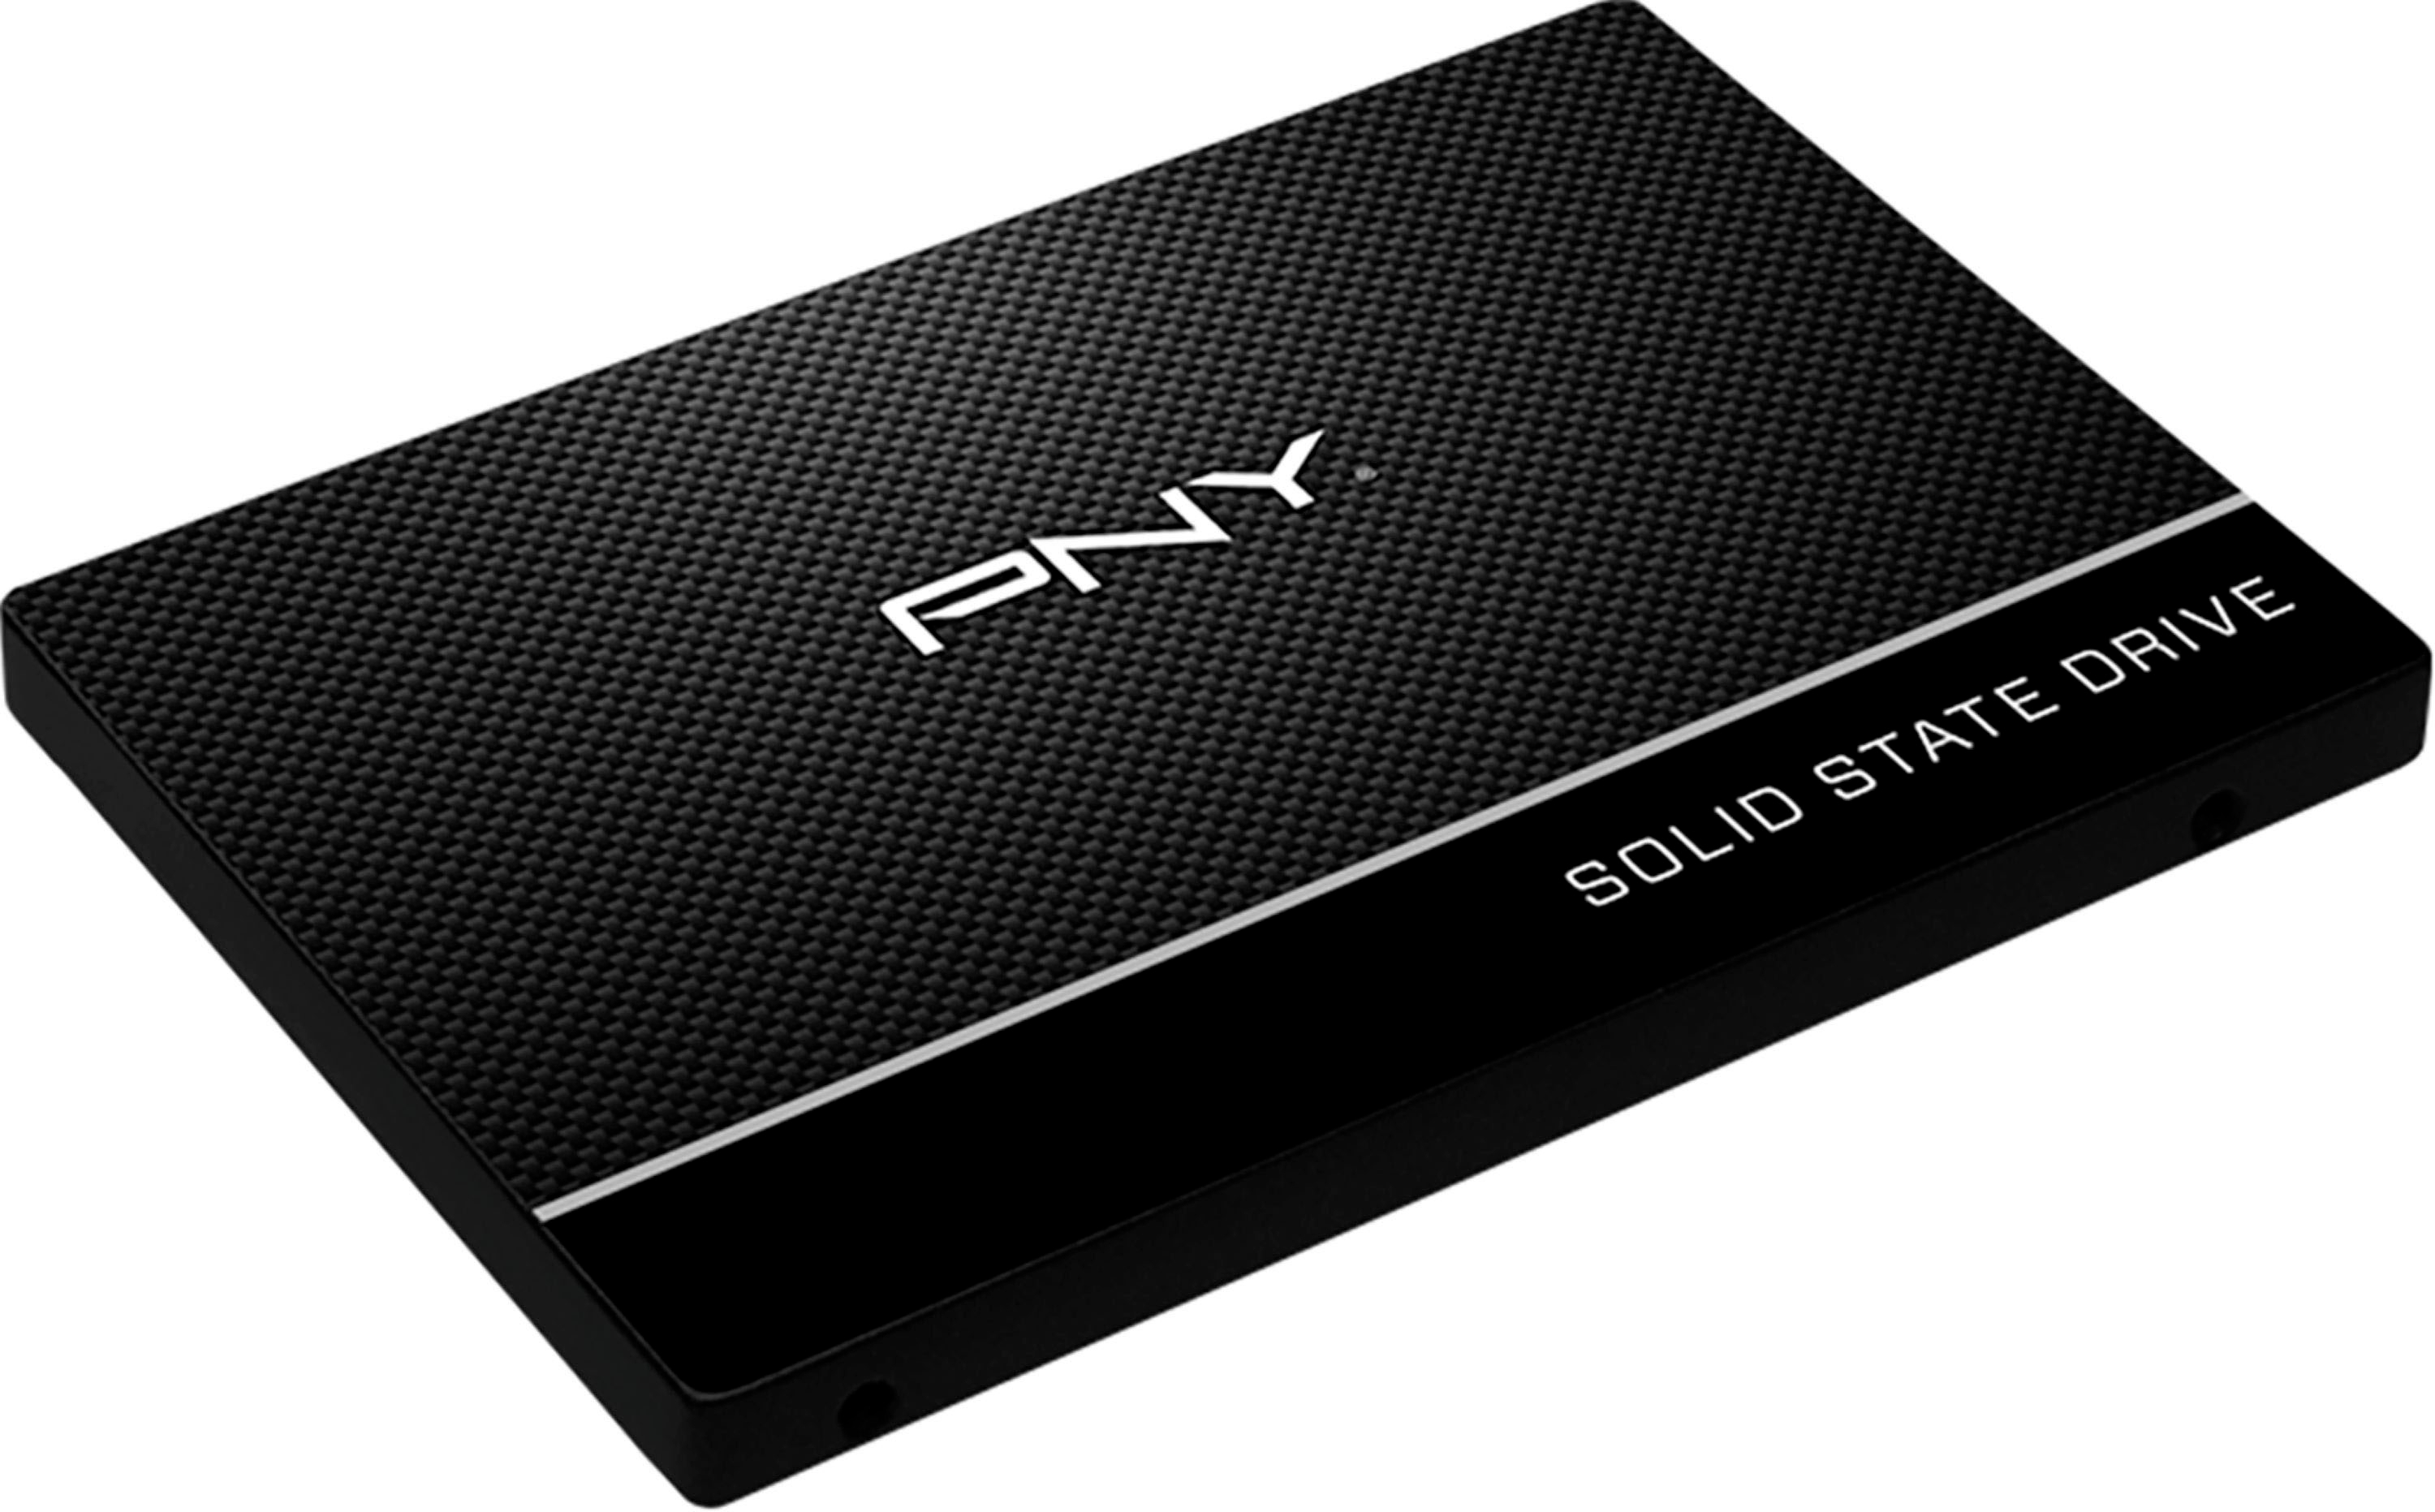 Plastic PNY SSD 240 GB 2.5 internal SSD for Laptop/Desktop, Model